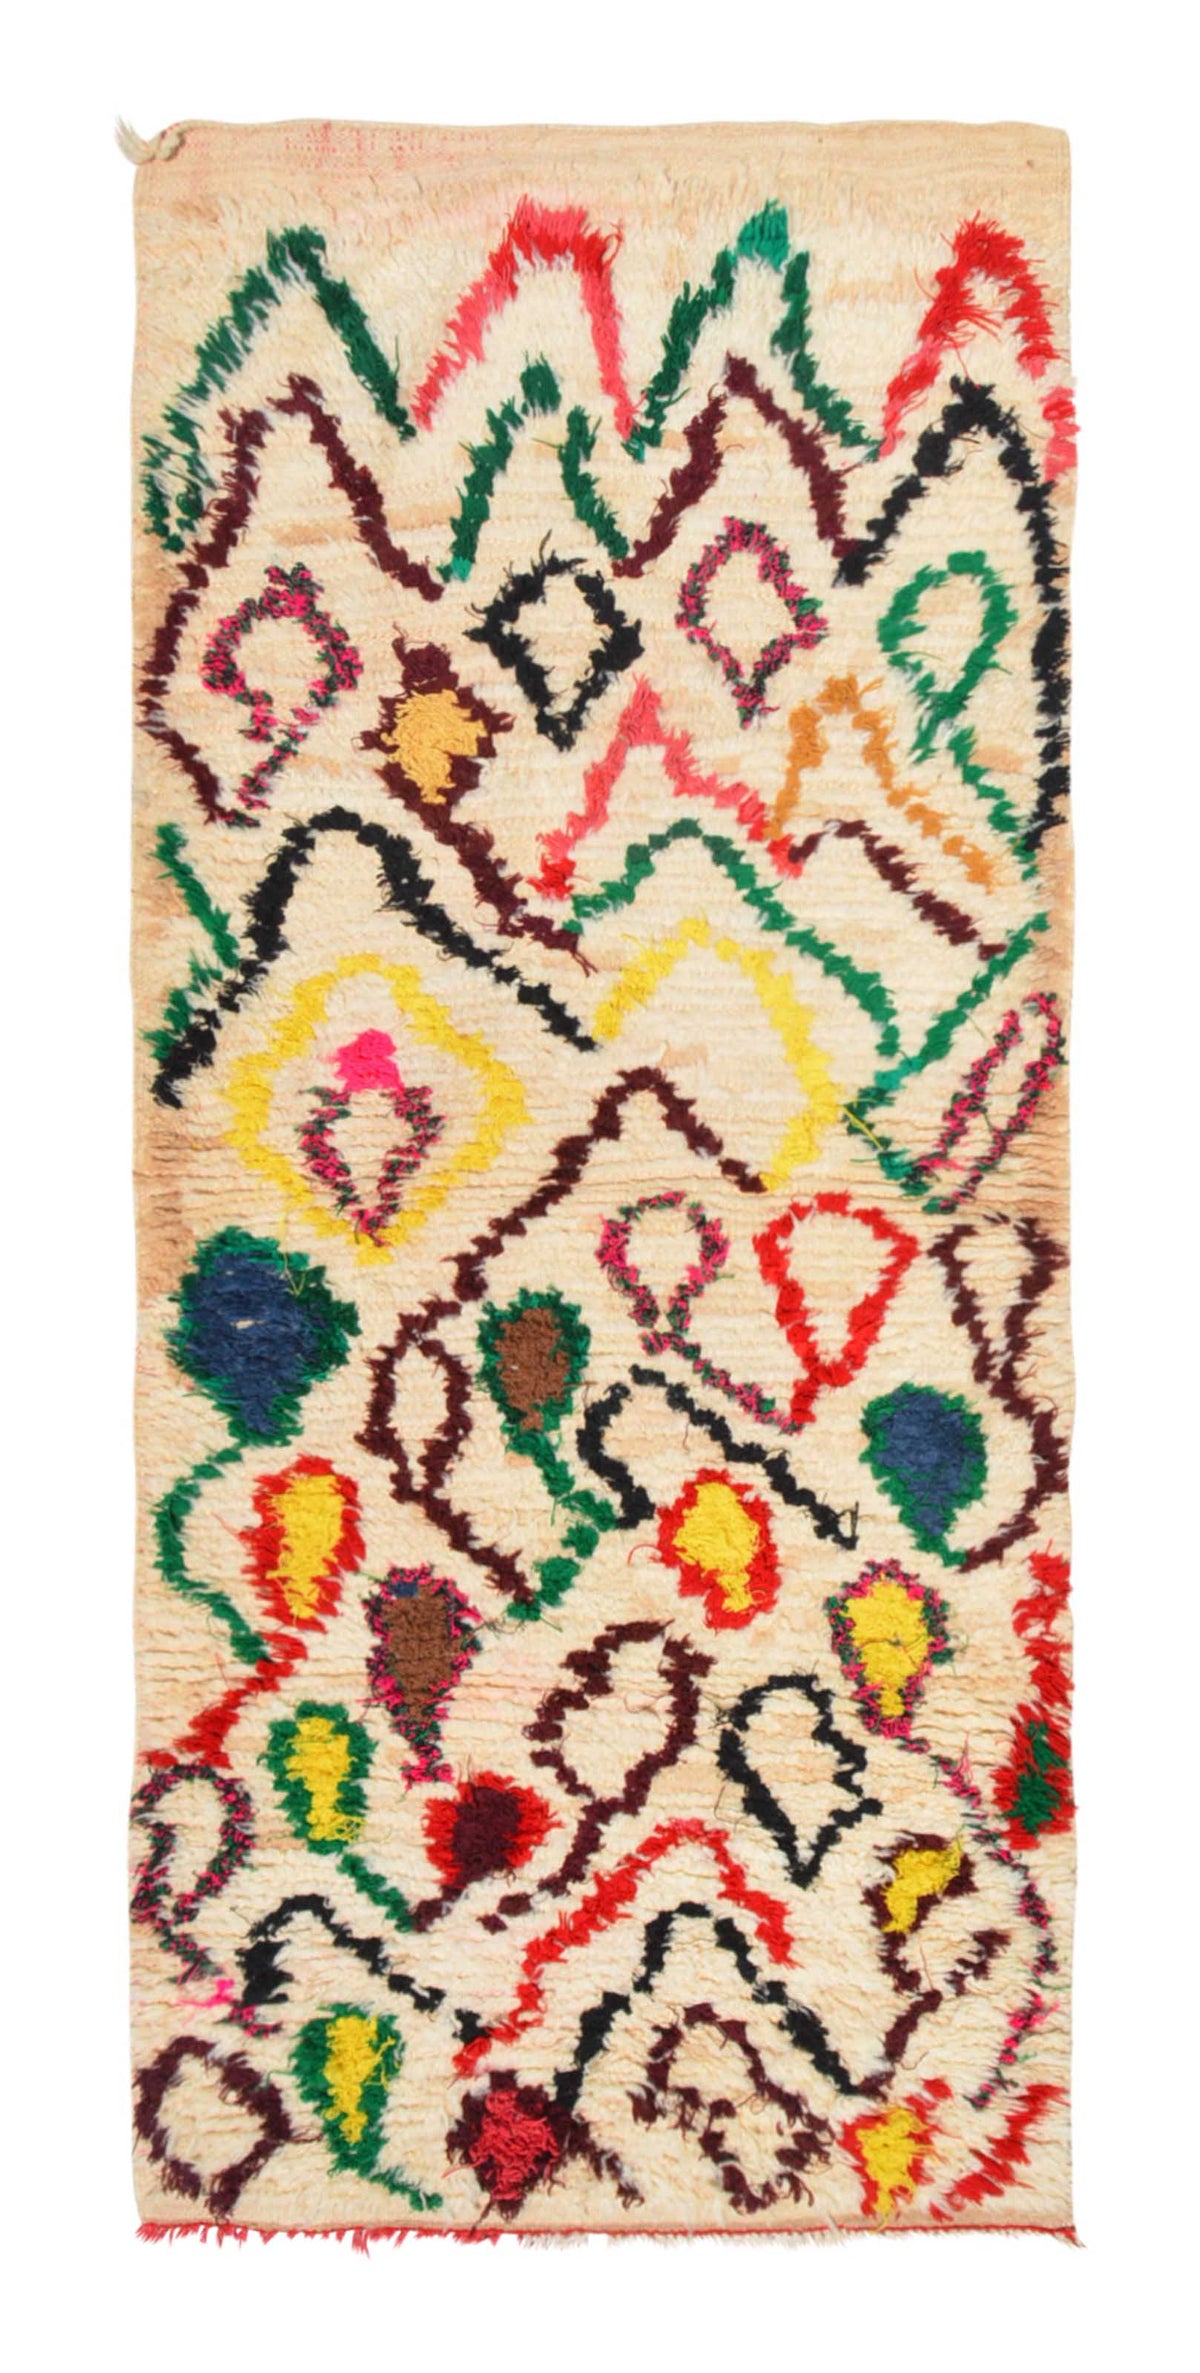 Vintage Moroccan Rug Buy Modern Handmade Moroccan Rugs | Vintage Latch Hook Rug Kits | Illuminate Collective illuminate collective 